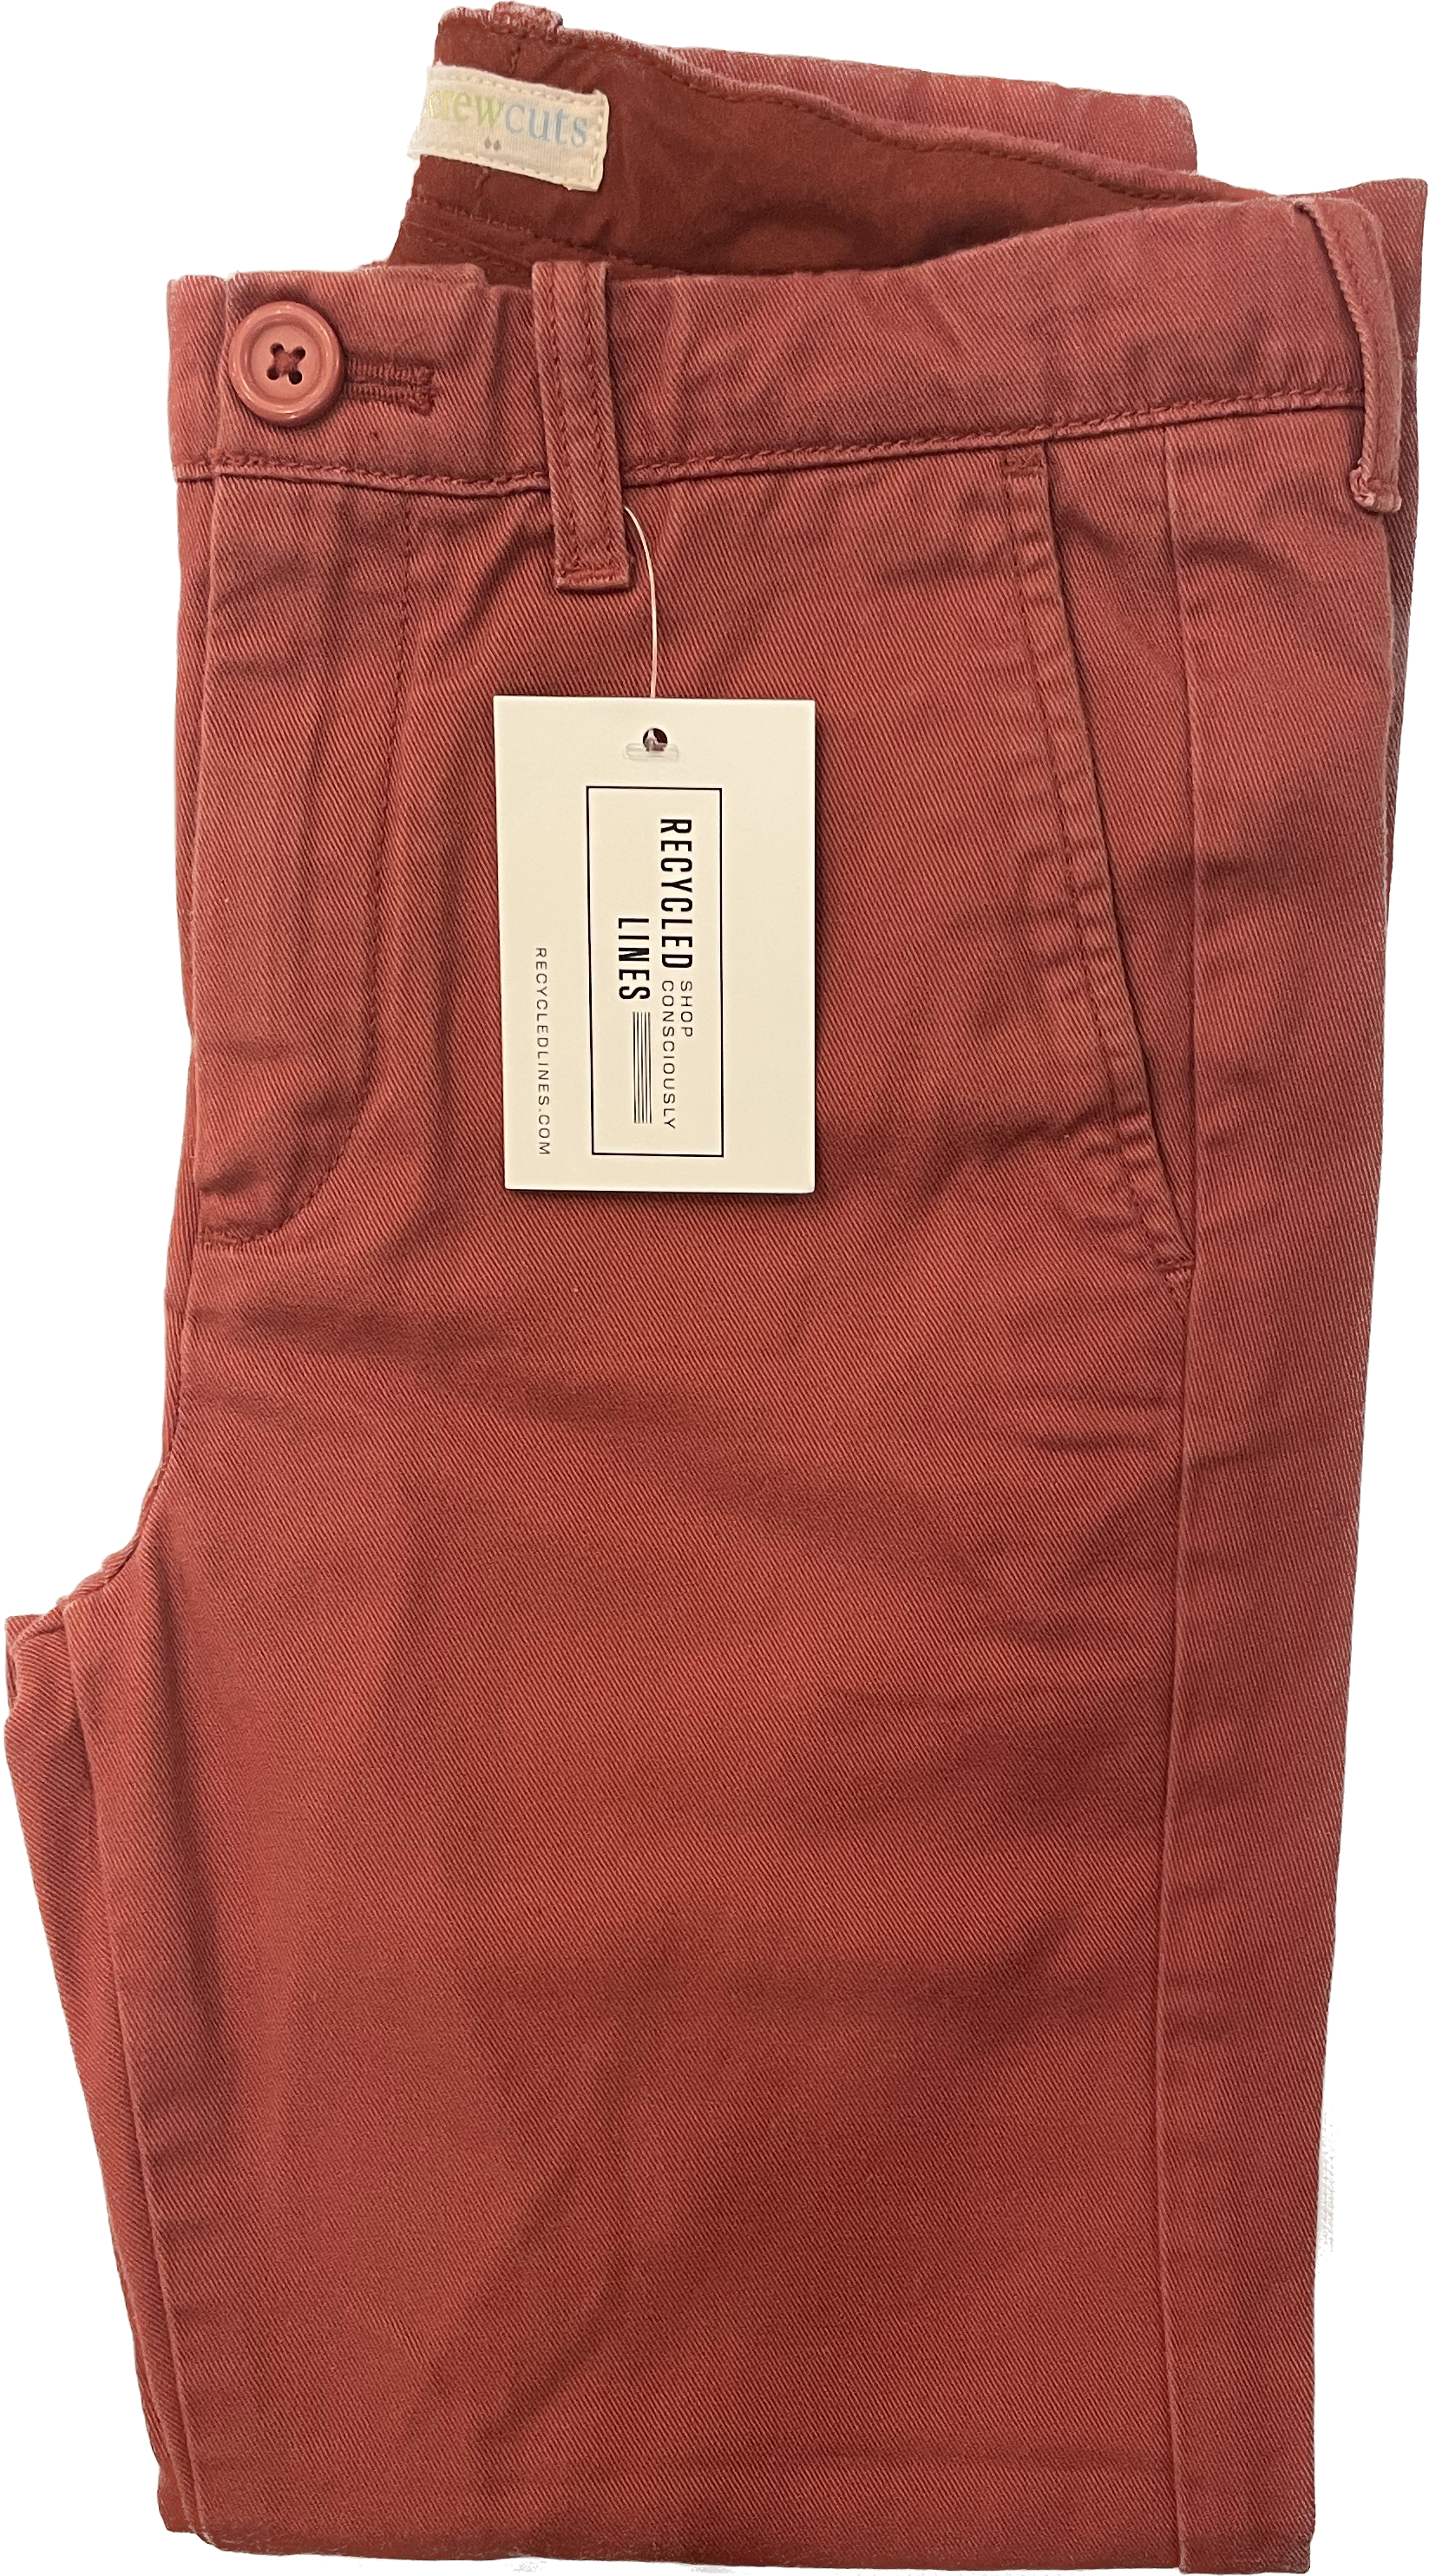 Crewcuts Pants, Nantucket Red Boys Size 8